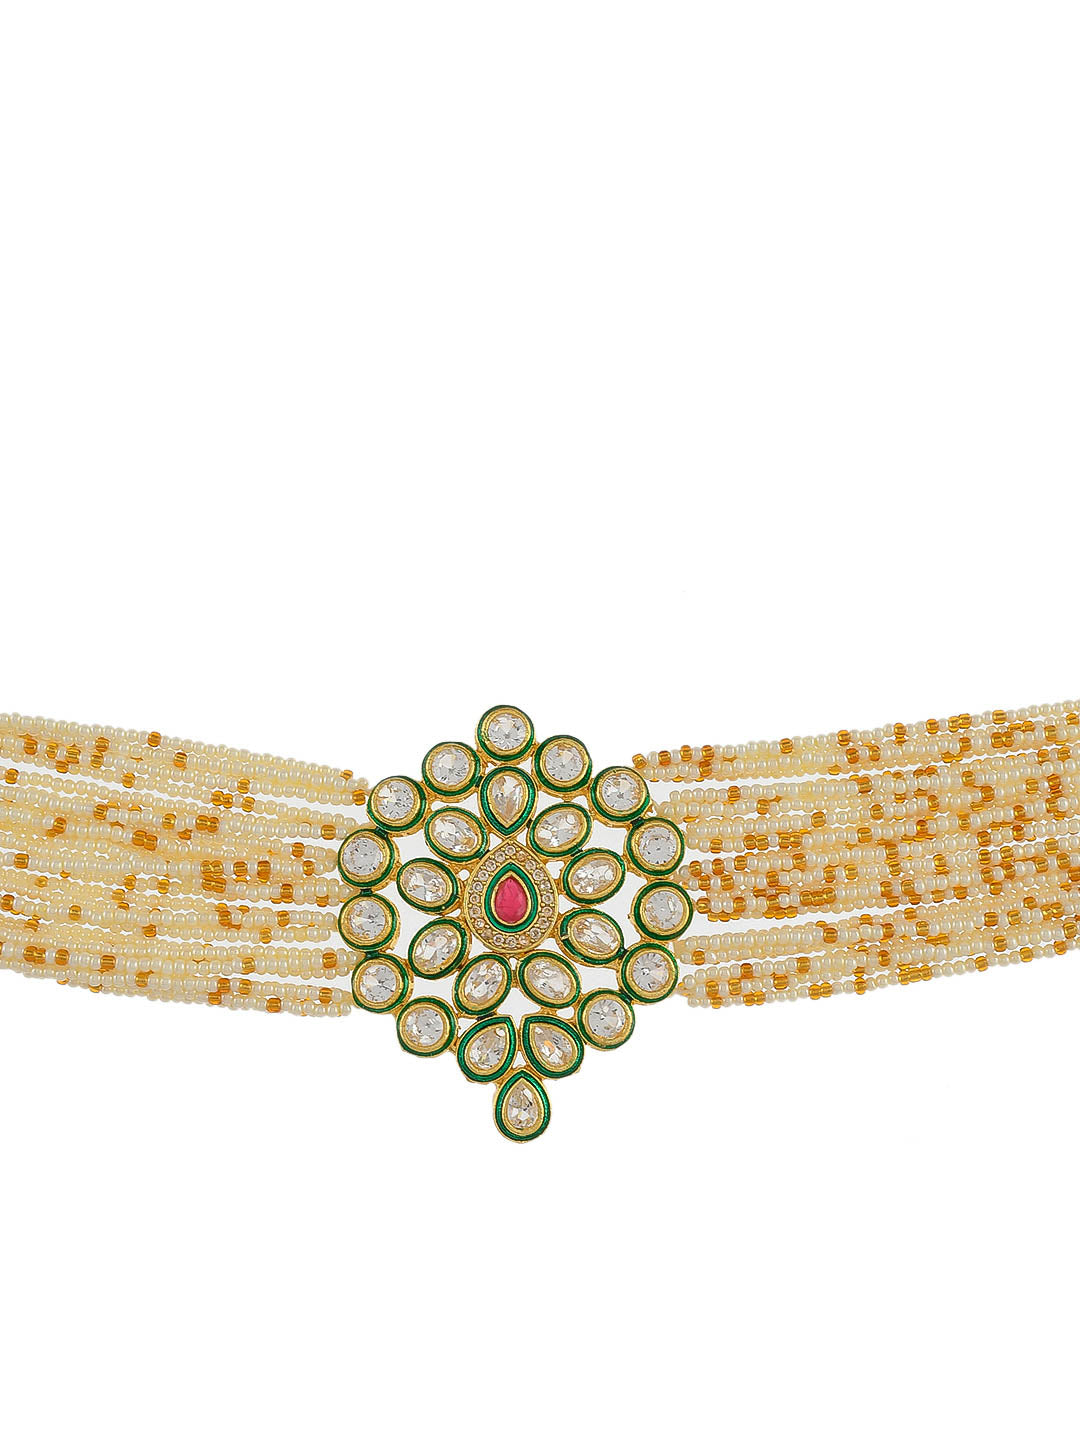 Indian Ethnic Gold Kundan Choker Necklace Set For Women Girls